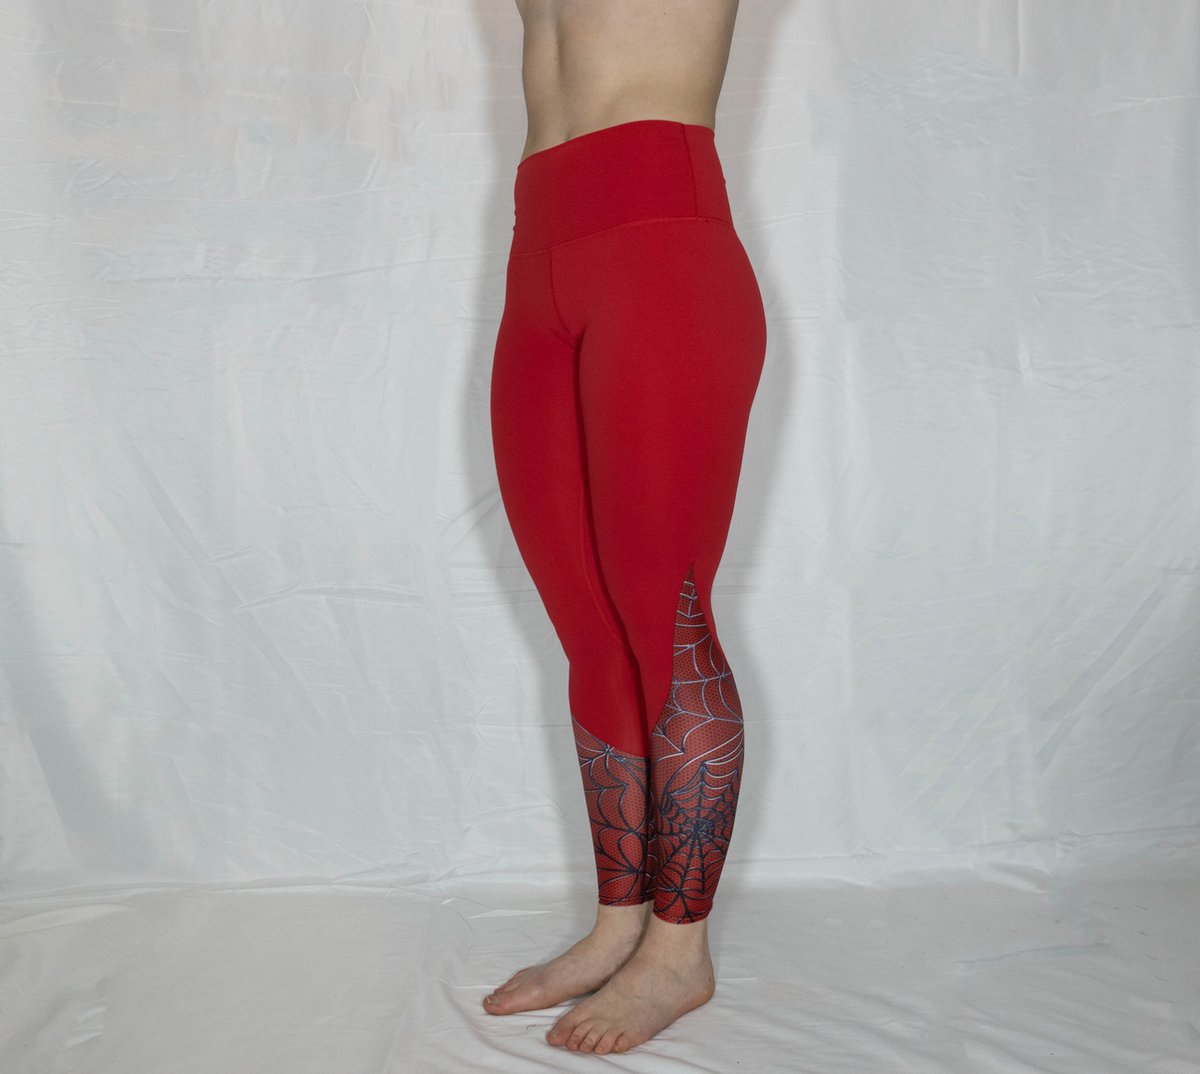 Rooz sportswear - spiderman - sport - legging - fitness - yoga - high waist - dames - rood - sportlegging - maat S